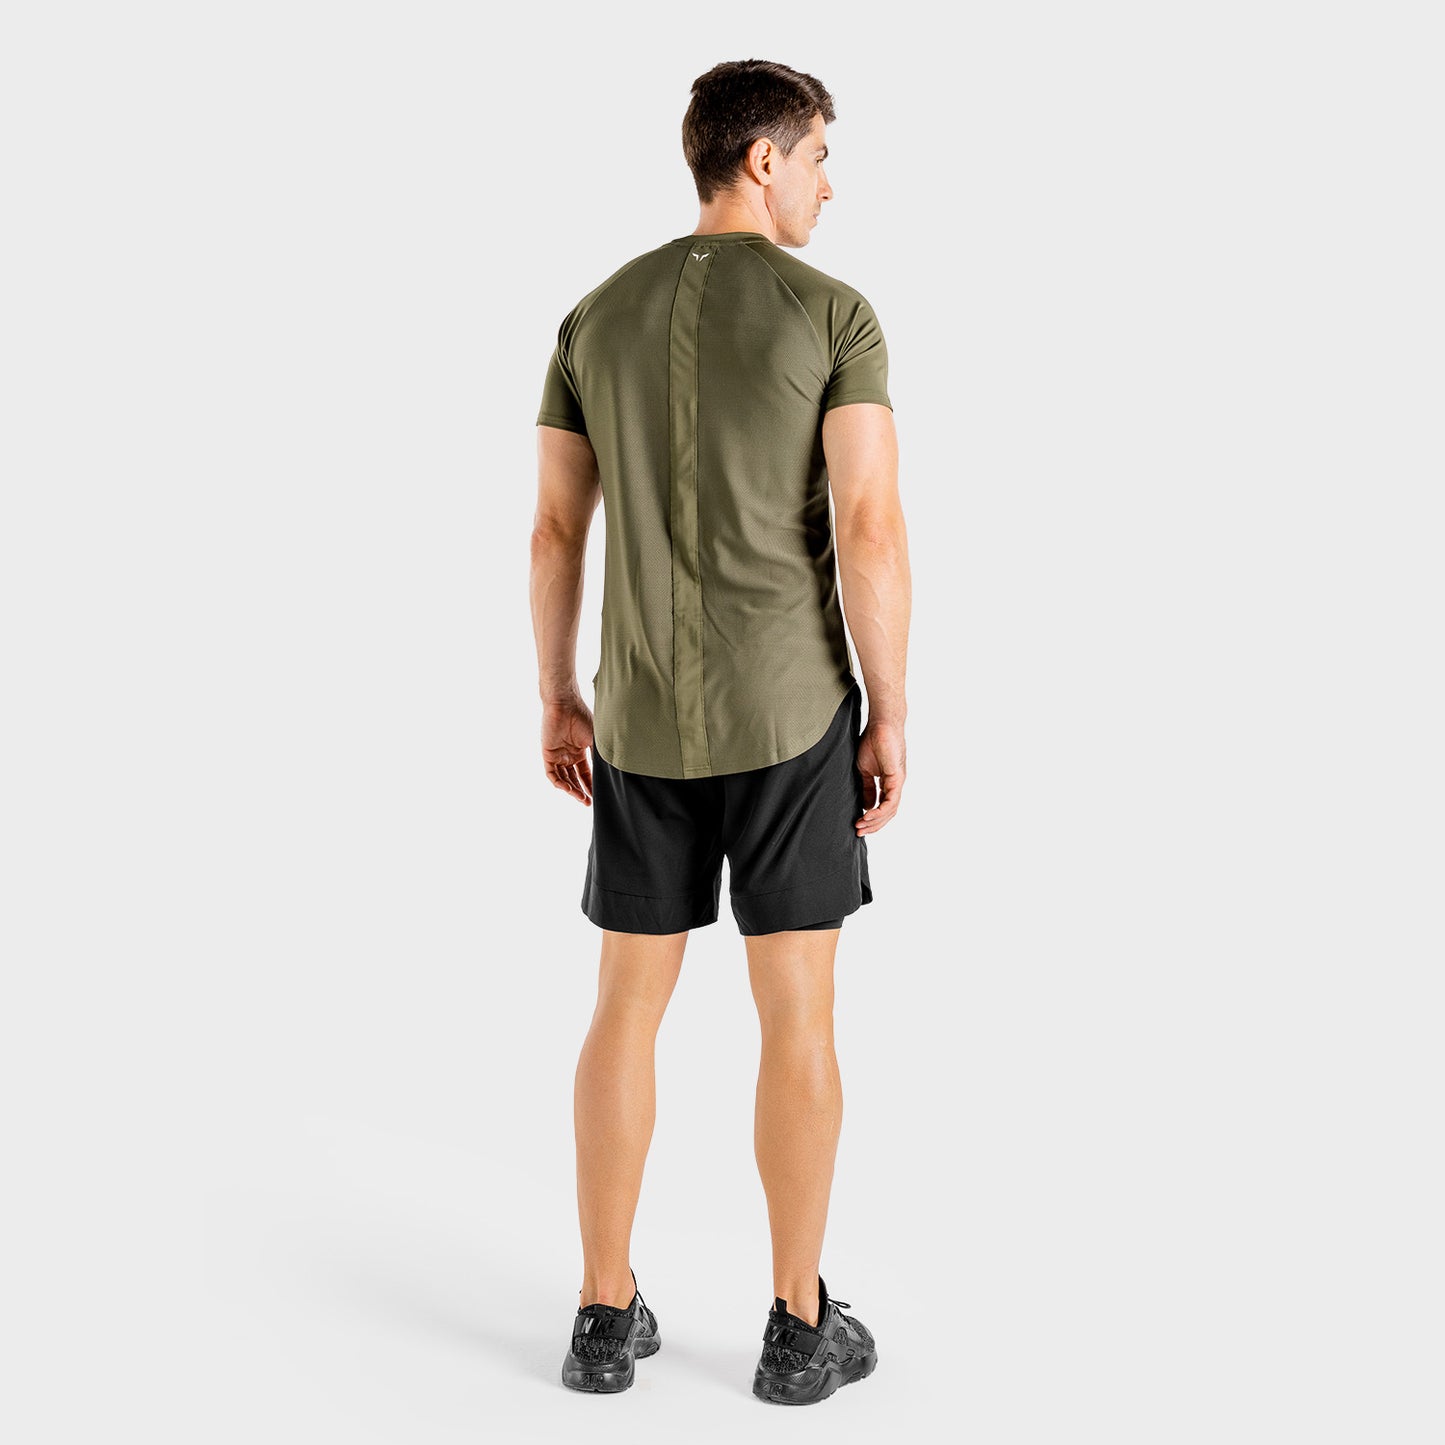 squatwolf-gym-wear-limitless-razor-tee-khaki-workout-shirts-for-men